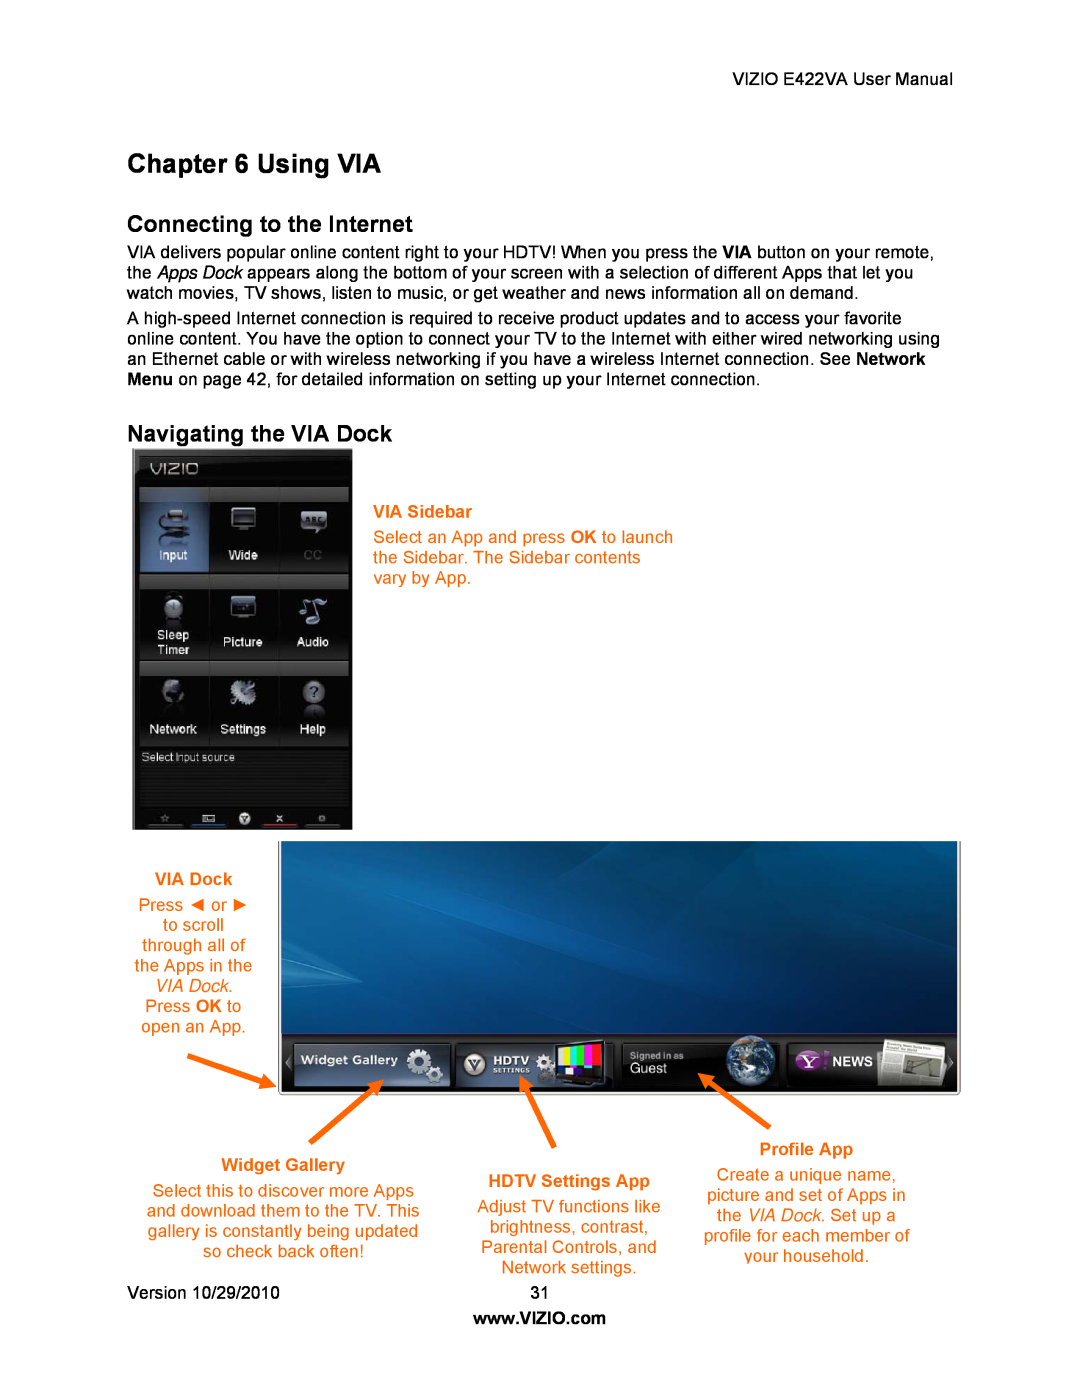 Xerox E422VA Using VIA, Navigating the VIA Dock, Connecting to the Internet, VIA Sidebar, HDTV Settings App, Profile App 